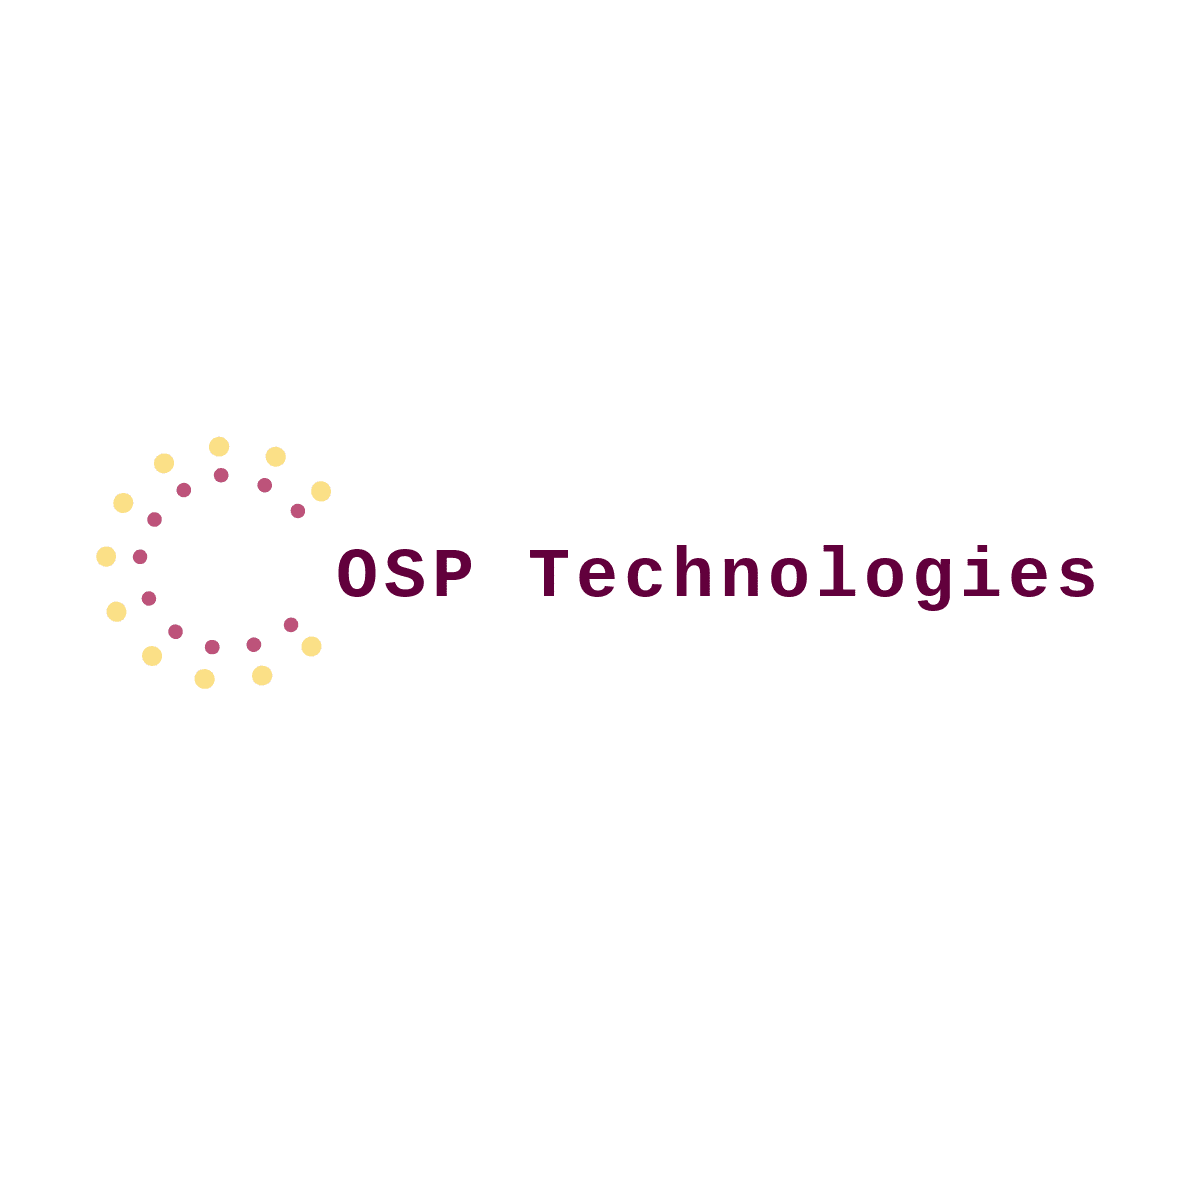 OSP Technologies